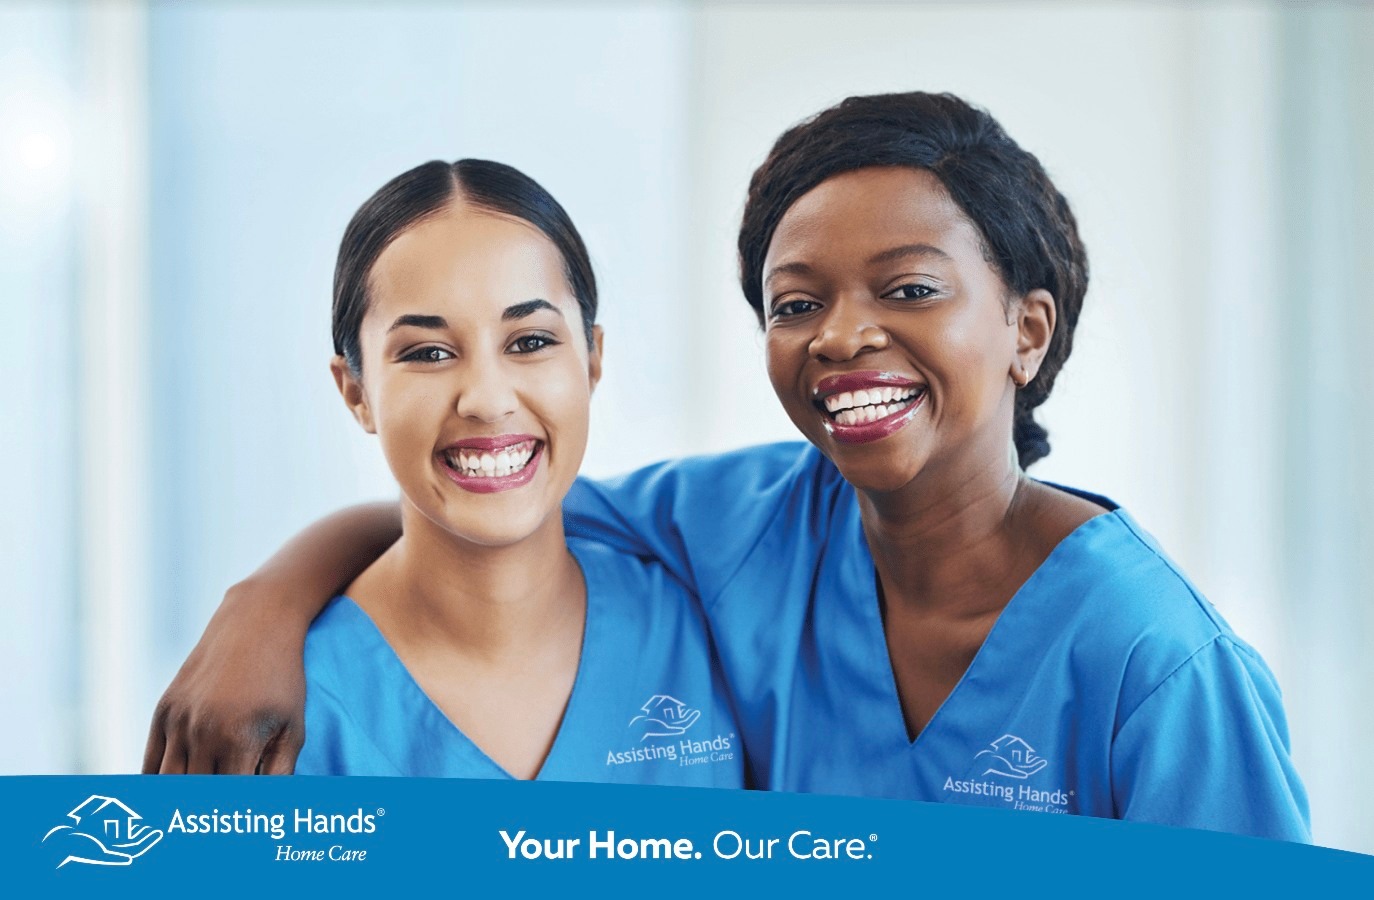 Assisting Hands Home Care caregivers